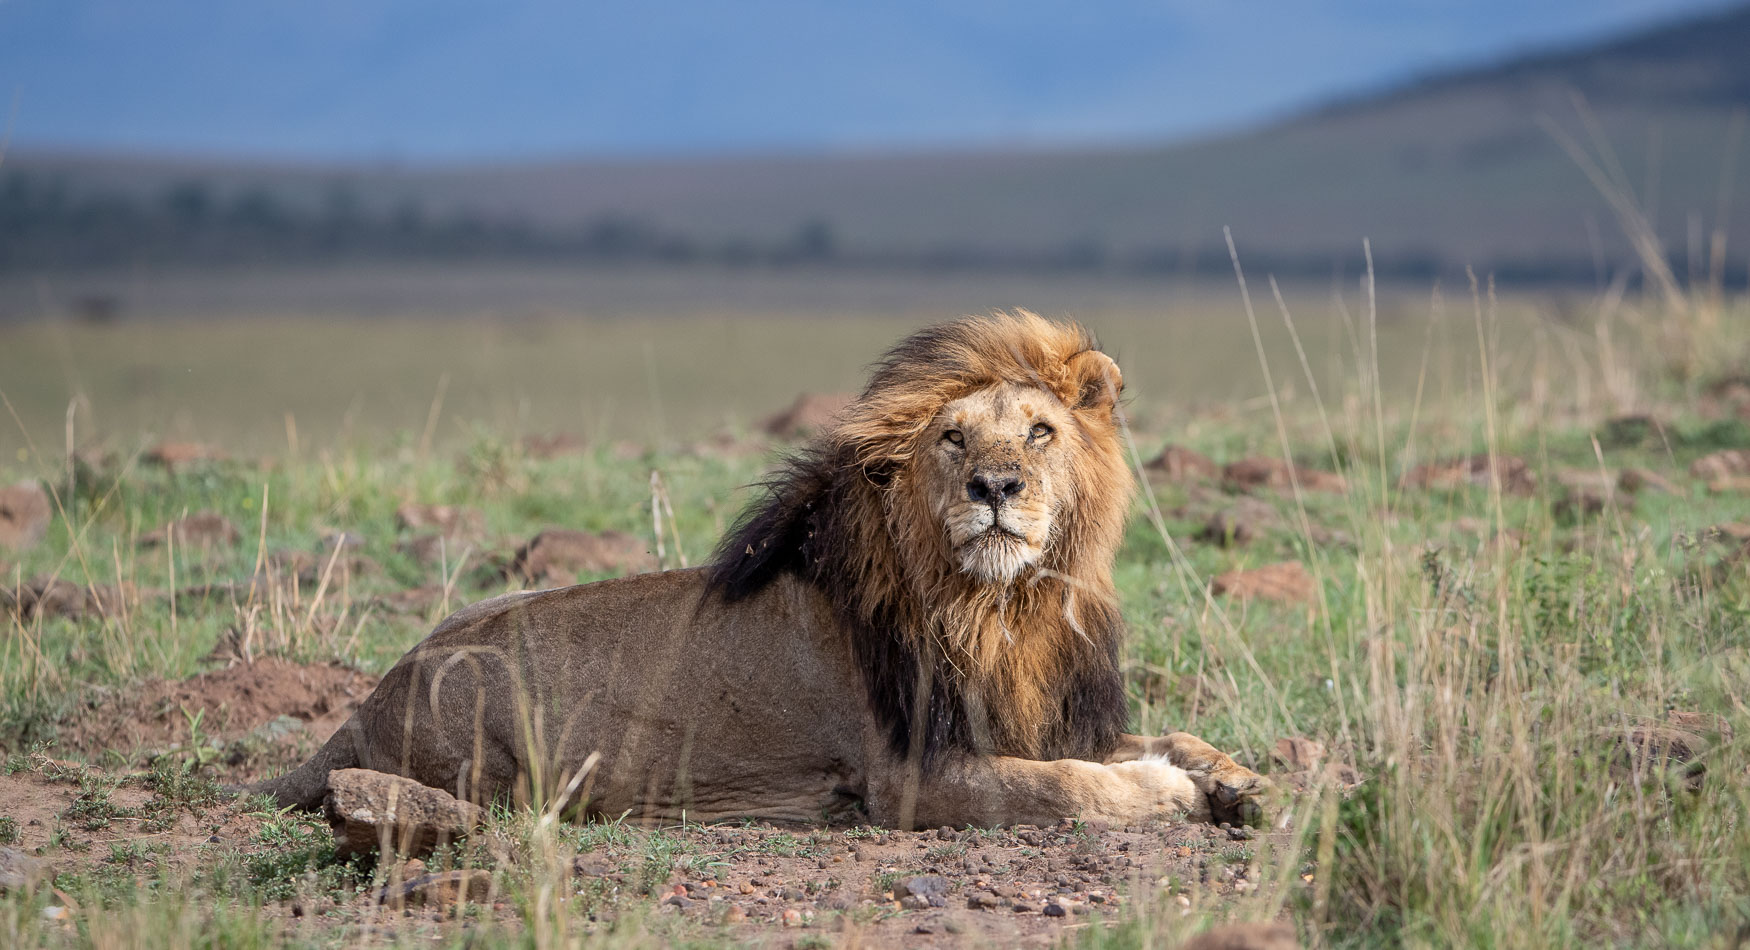 The Mara Triangle male Lion with big backdrop